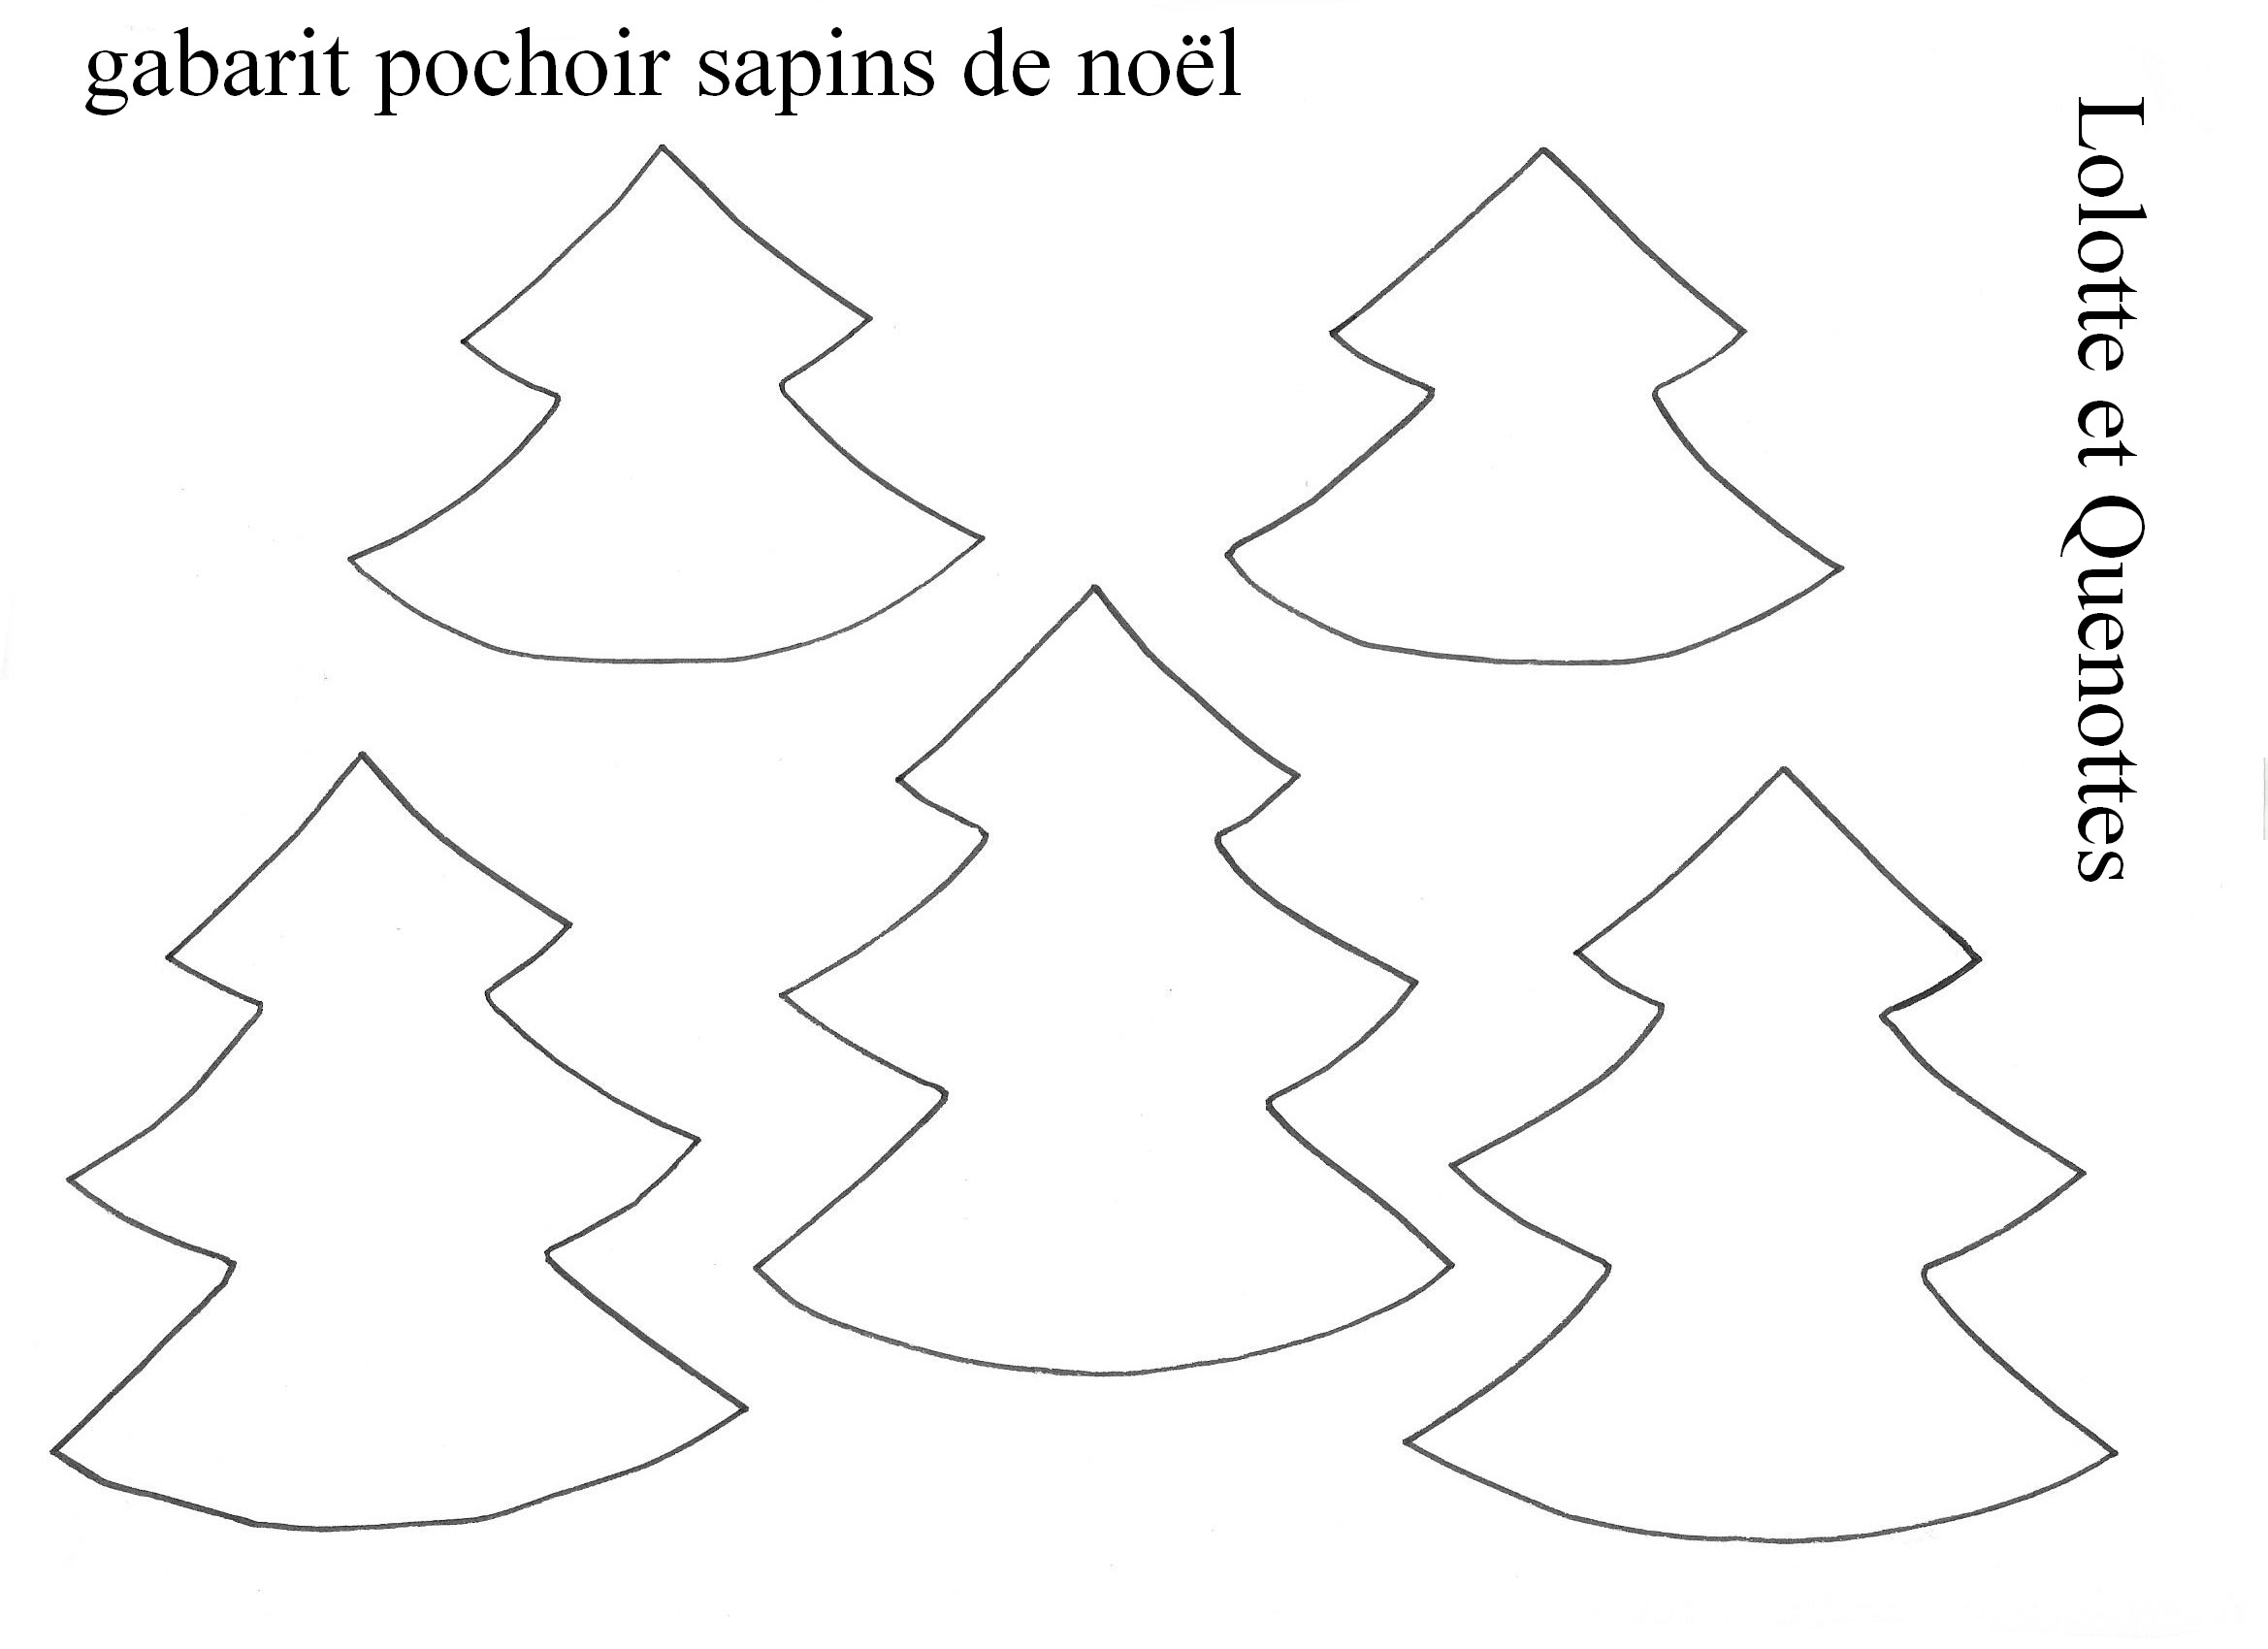 Pochoir Sapins De Noël pour Gabarit Sapin De Noel A Imprimer 